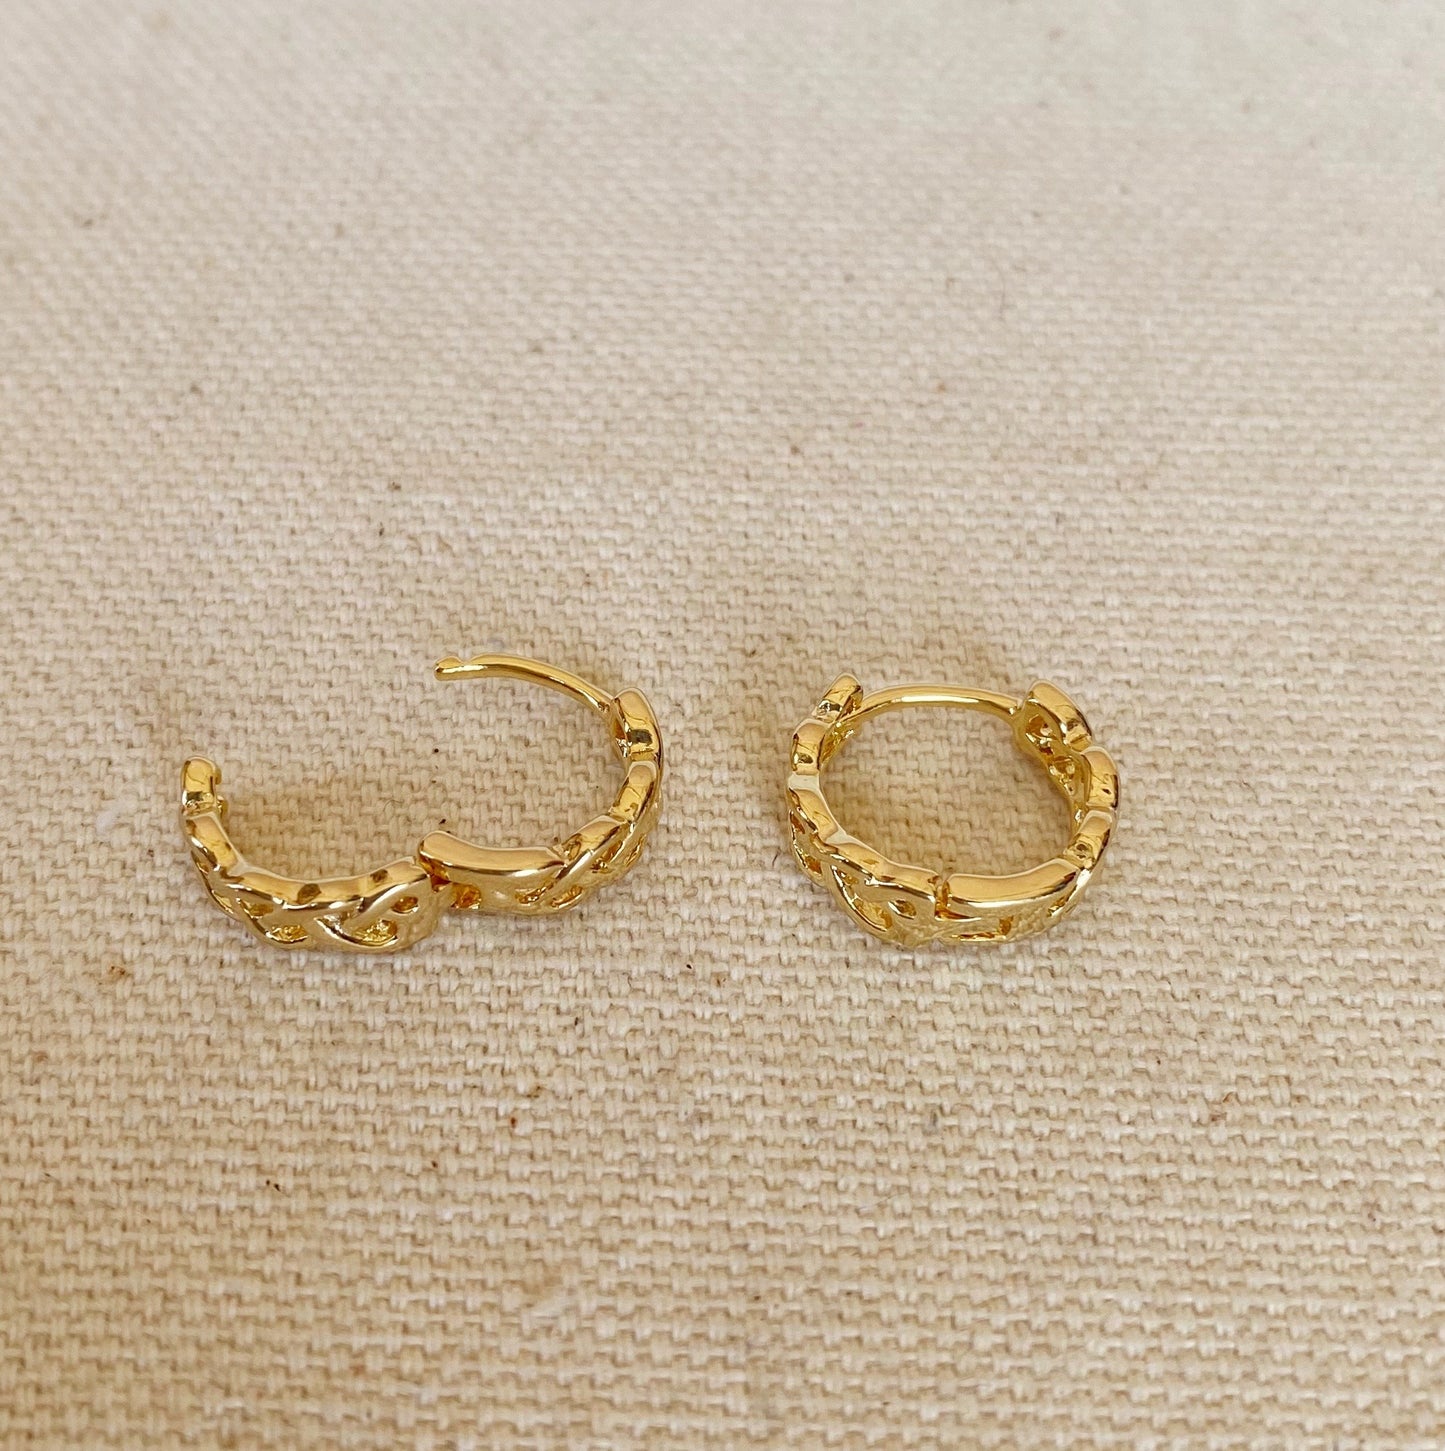 GoldFi 18k Gold Filled Braided Clicker Hoop Earrings